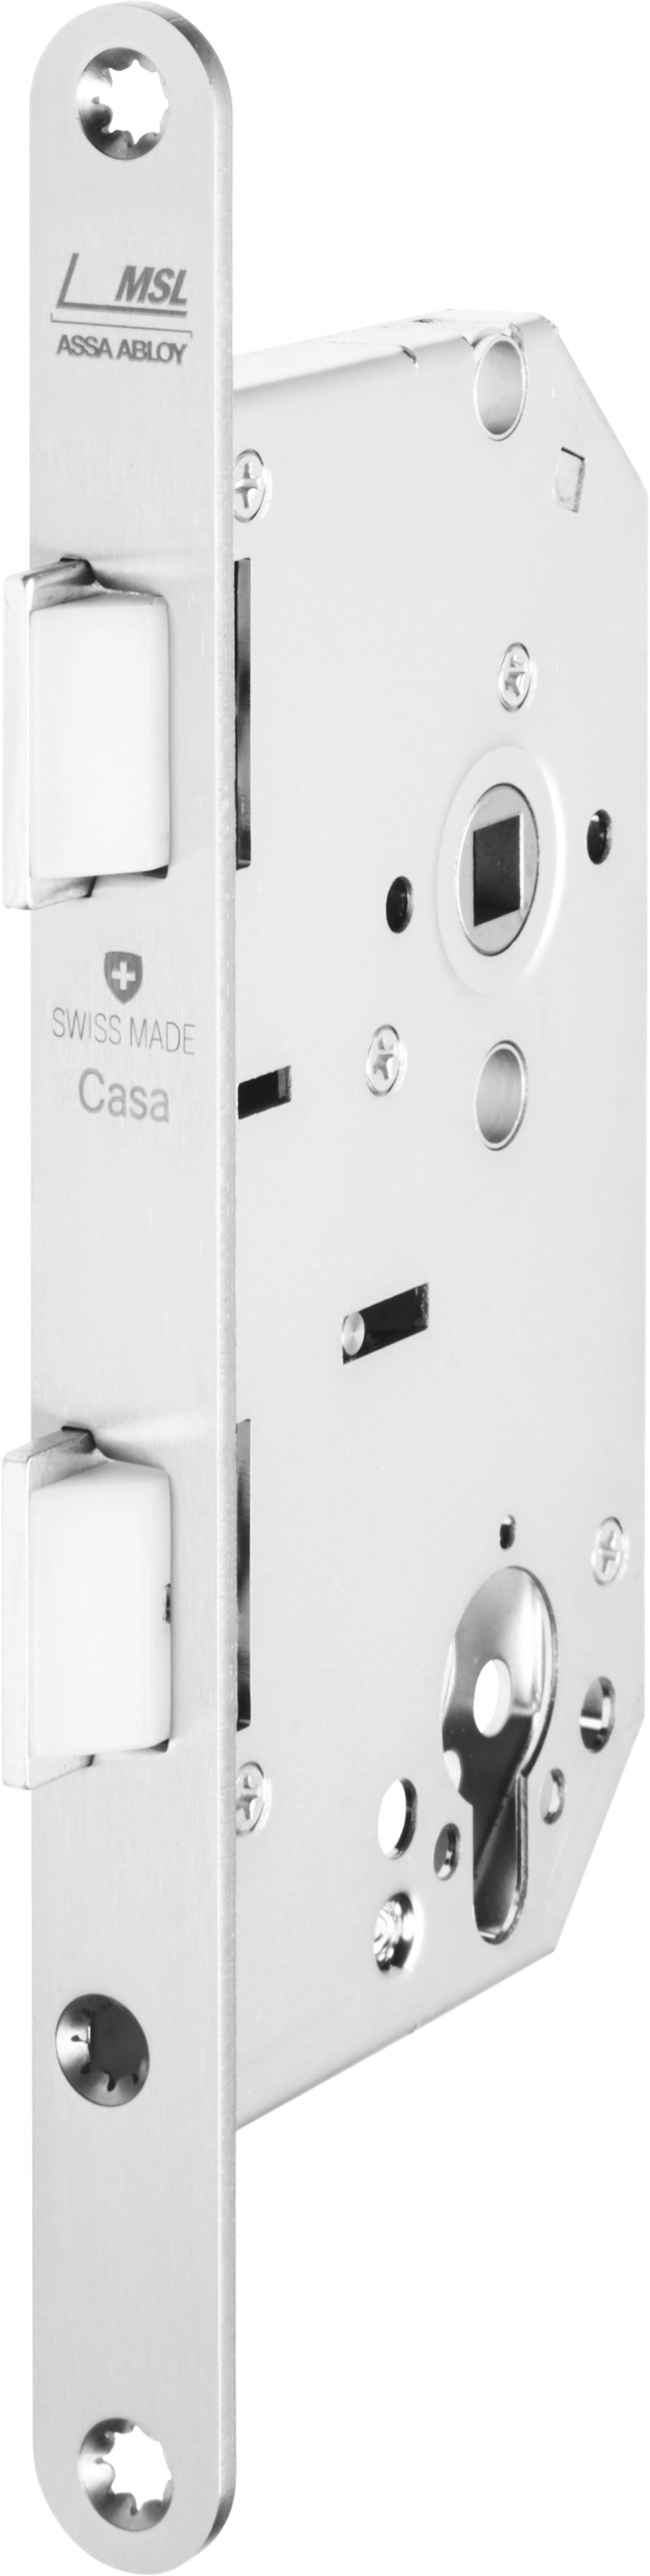 CASA Two-latch mortise lock 1236